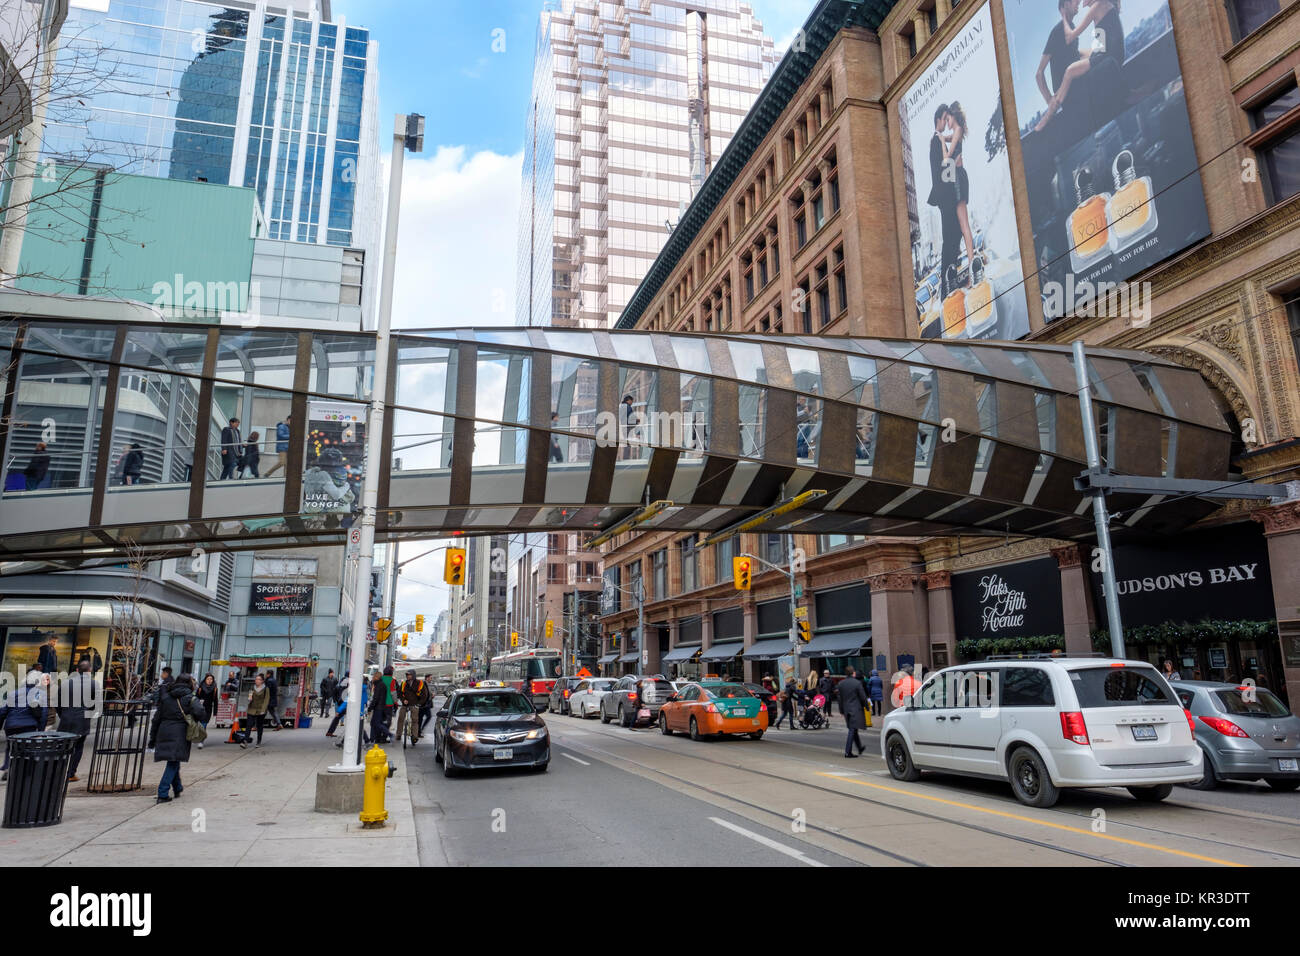 Fußweg, erhöhte Fußgängerweg Verknüpfung Toronto Eaton Centre Shopping Centre und Saks Fifth Avenue Toronto, Queen Street West, Kanada. Stockfoto